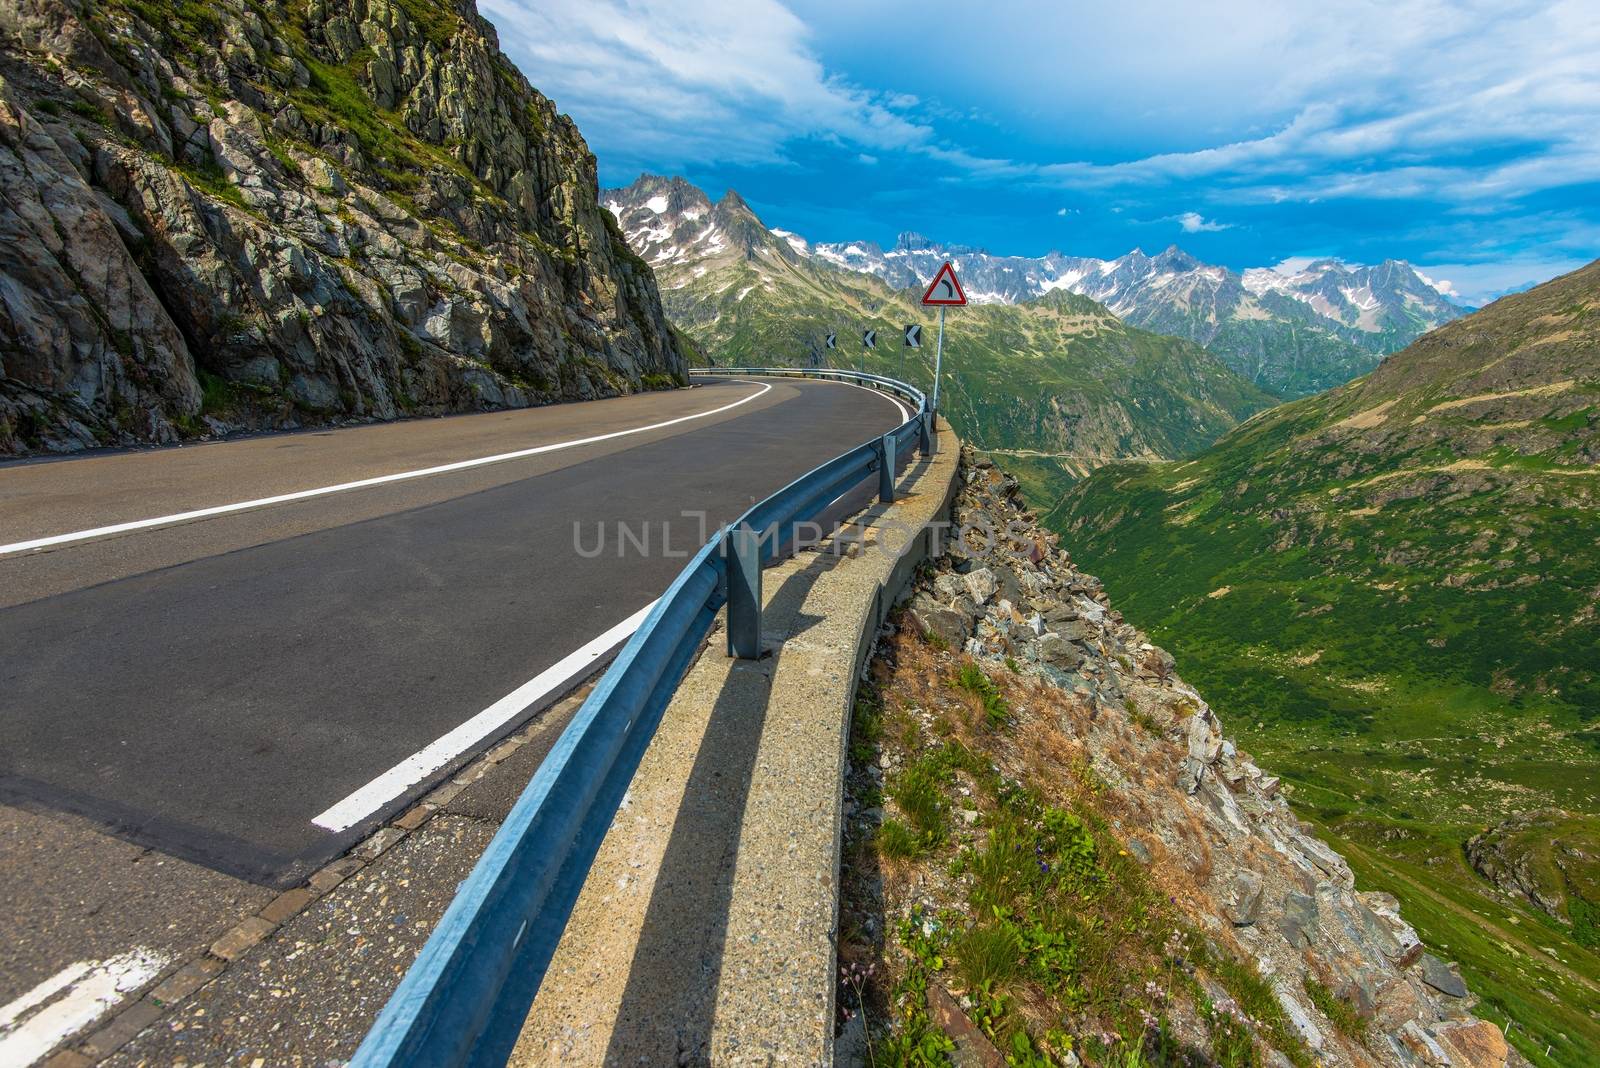 Swiss Alpine Road by welcomia